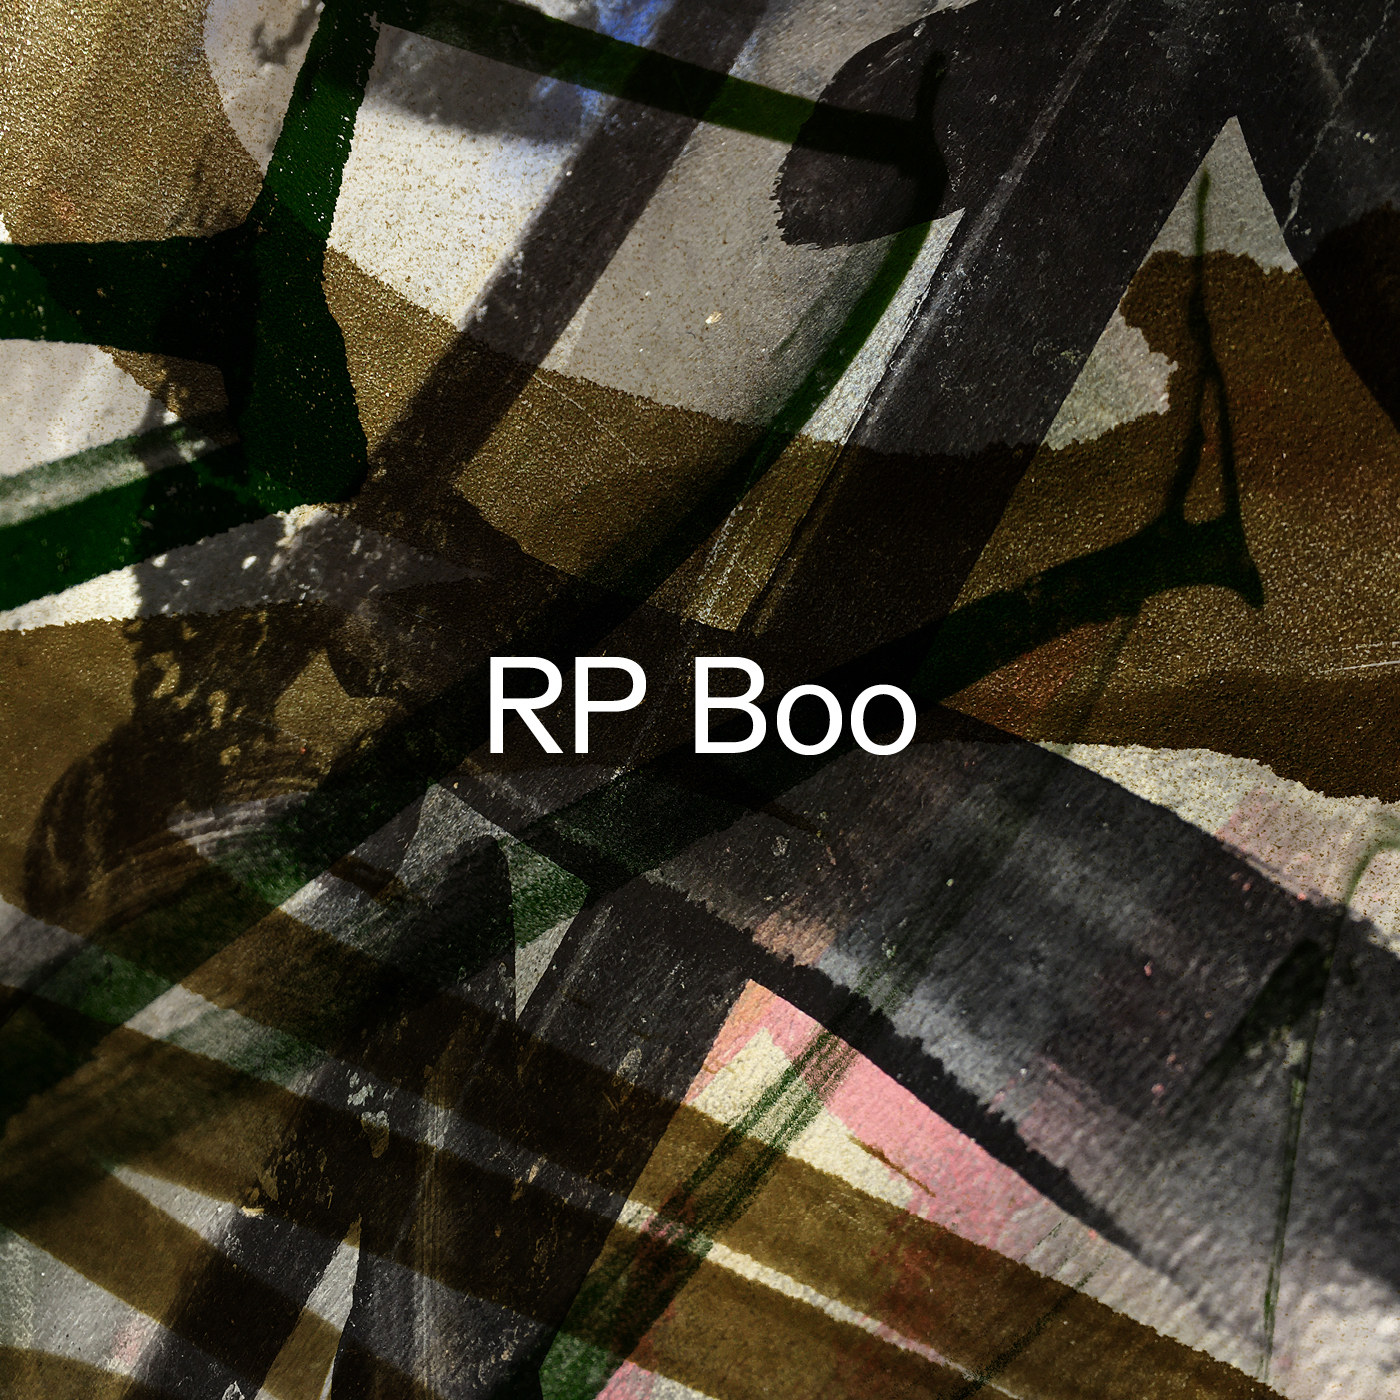 RP Boo – Established